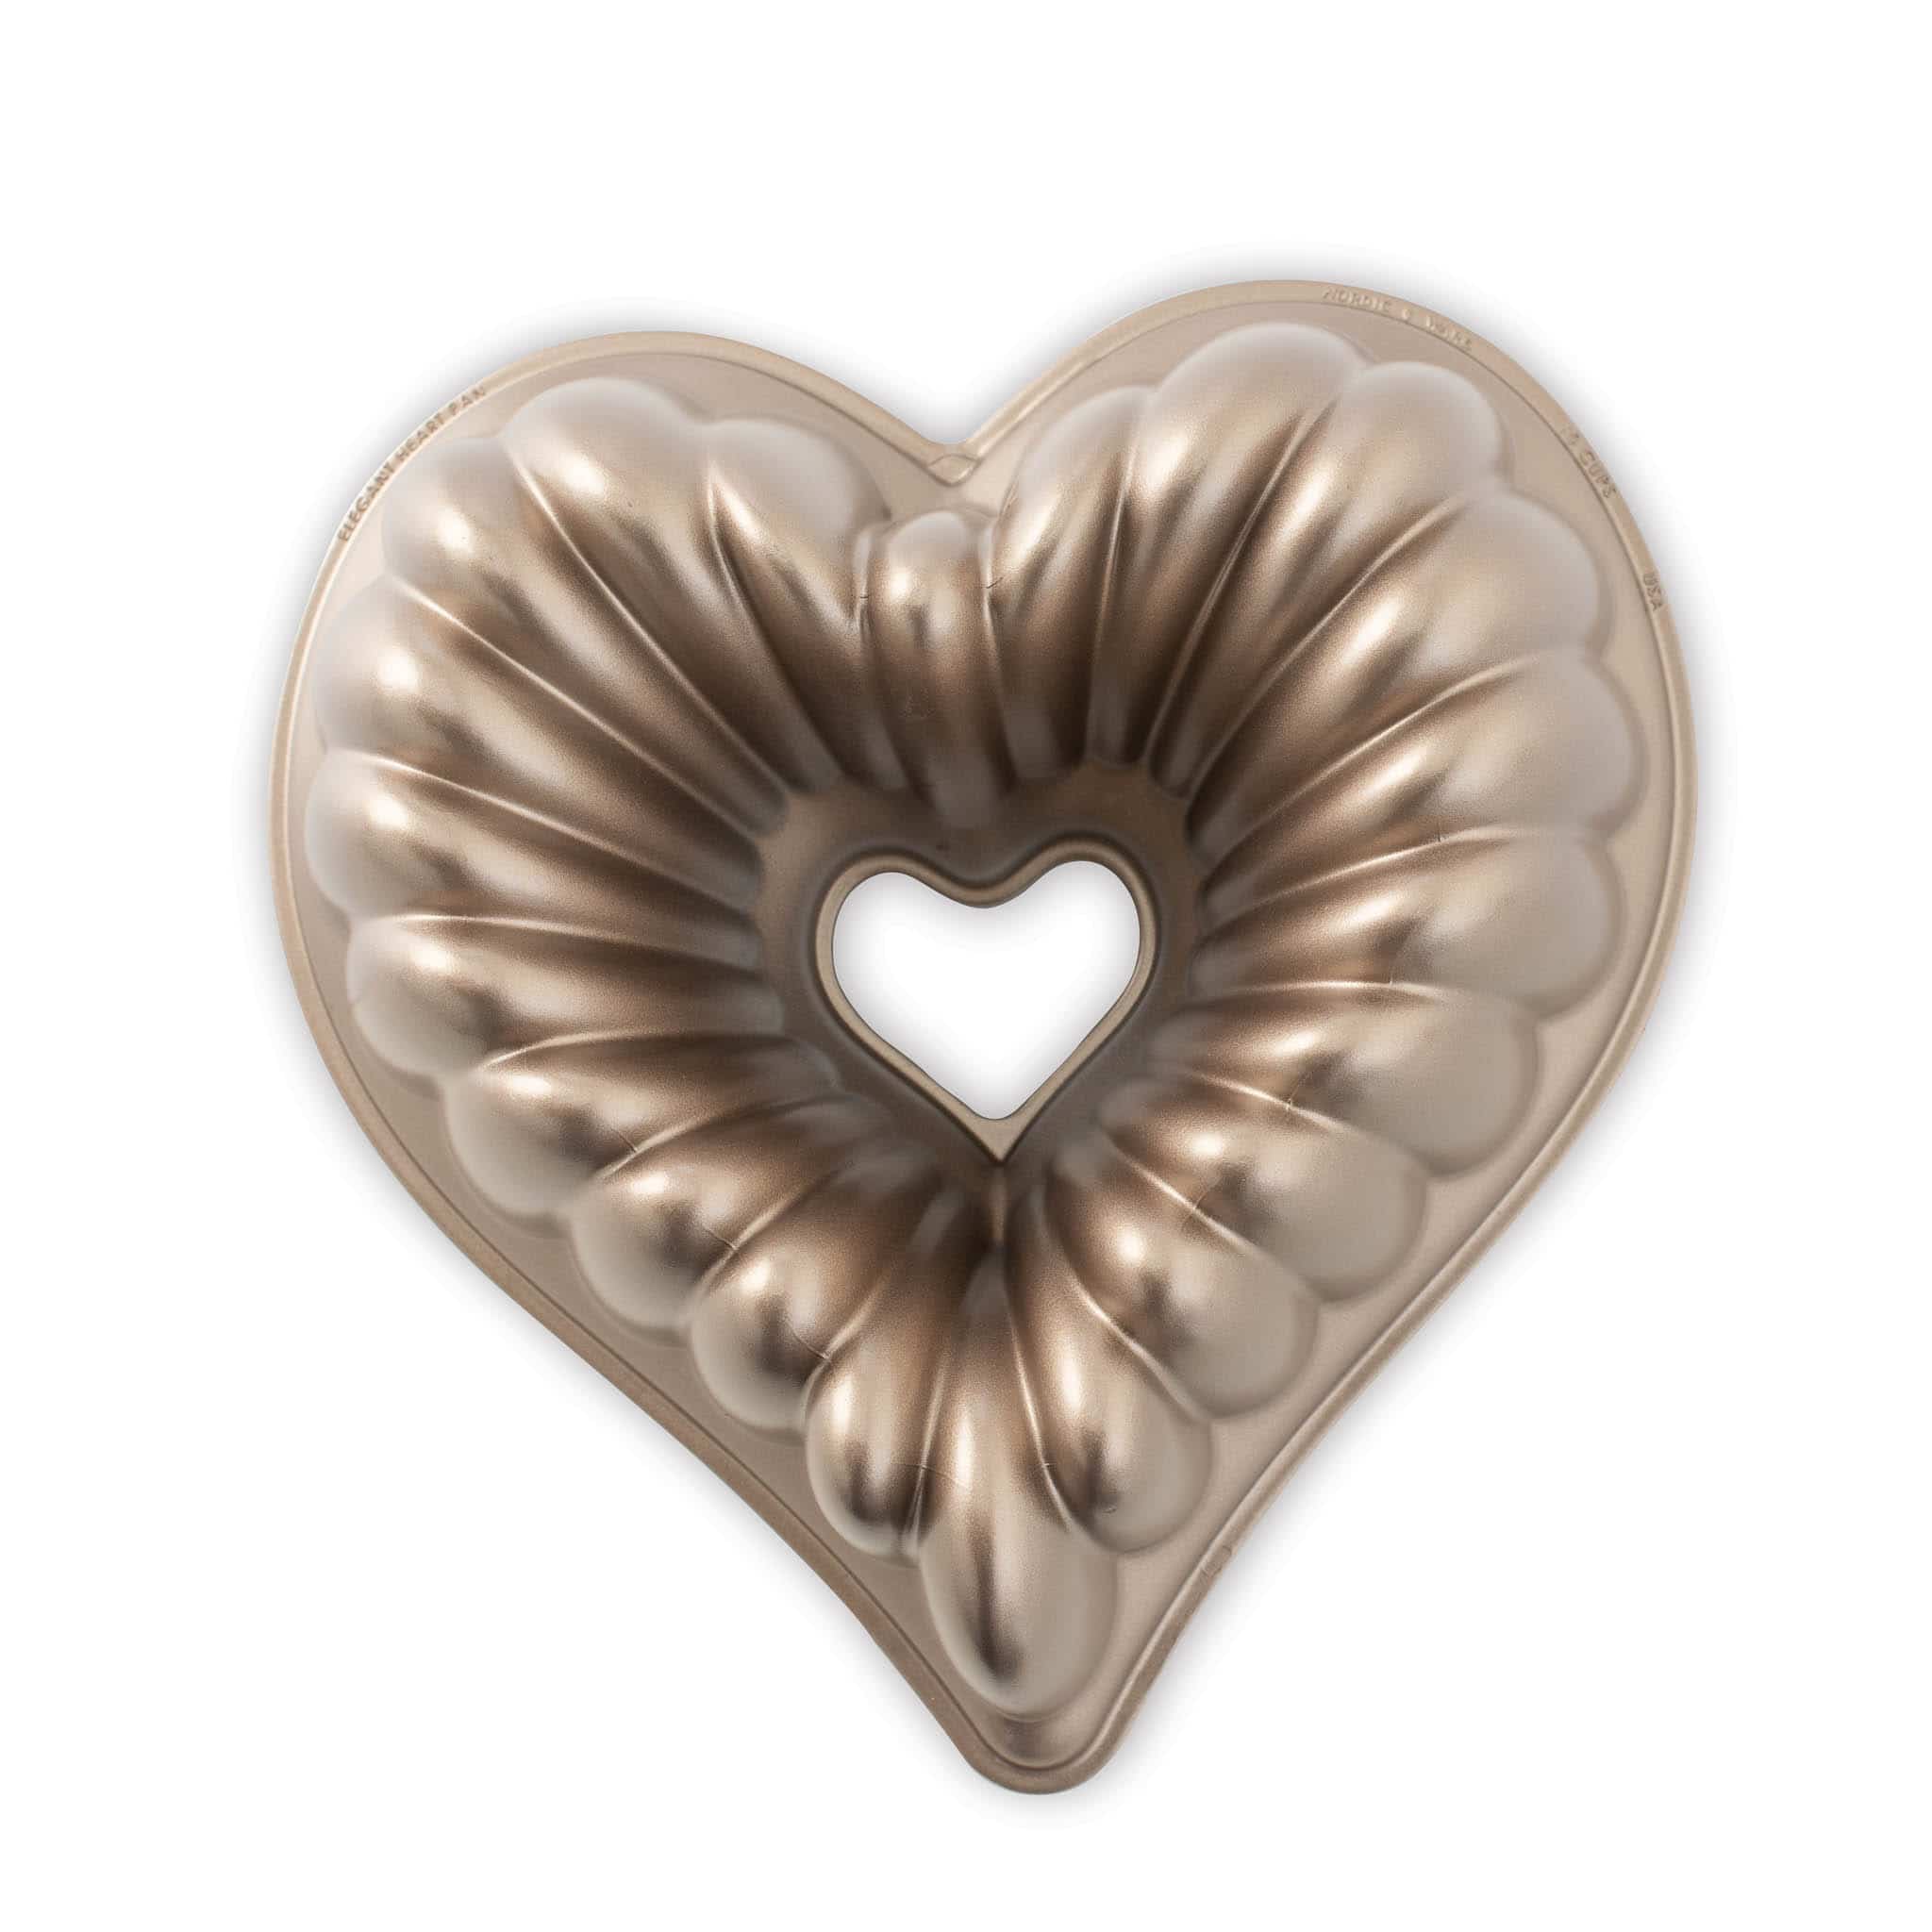 Nordicware Elegant Heart Bundt Pan